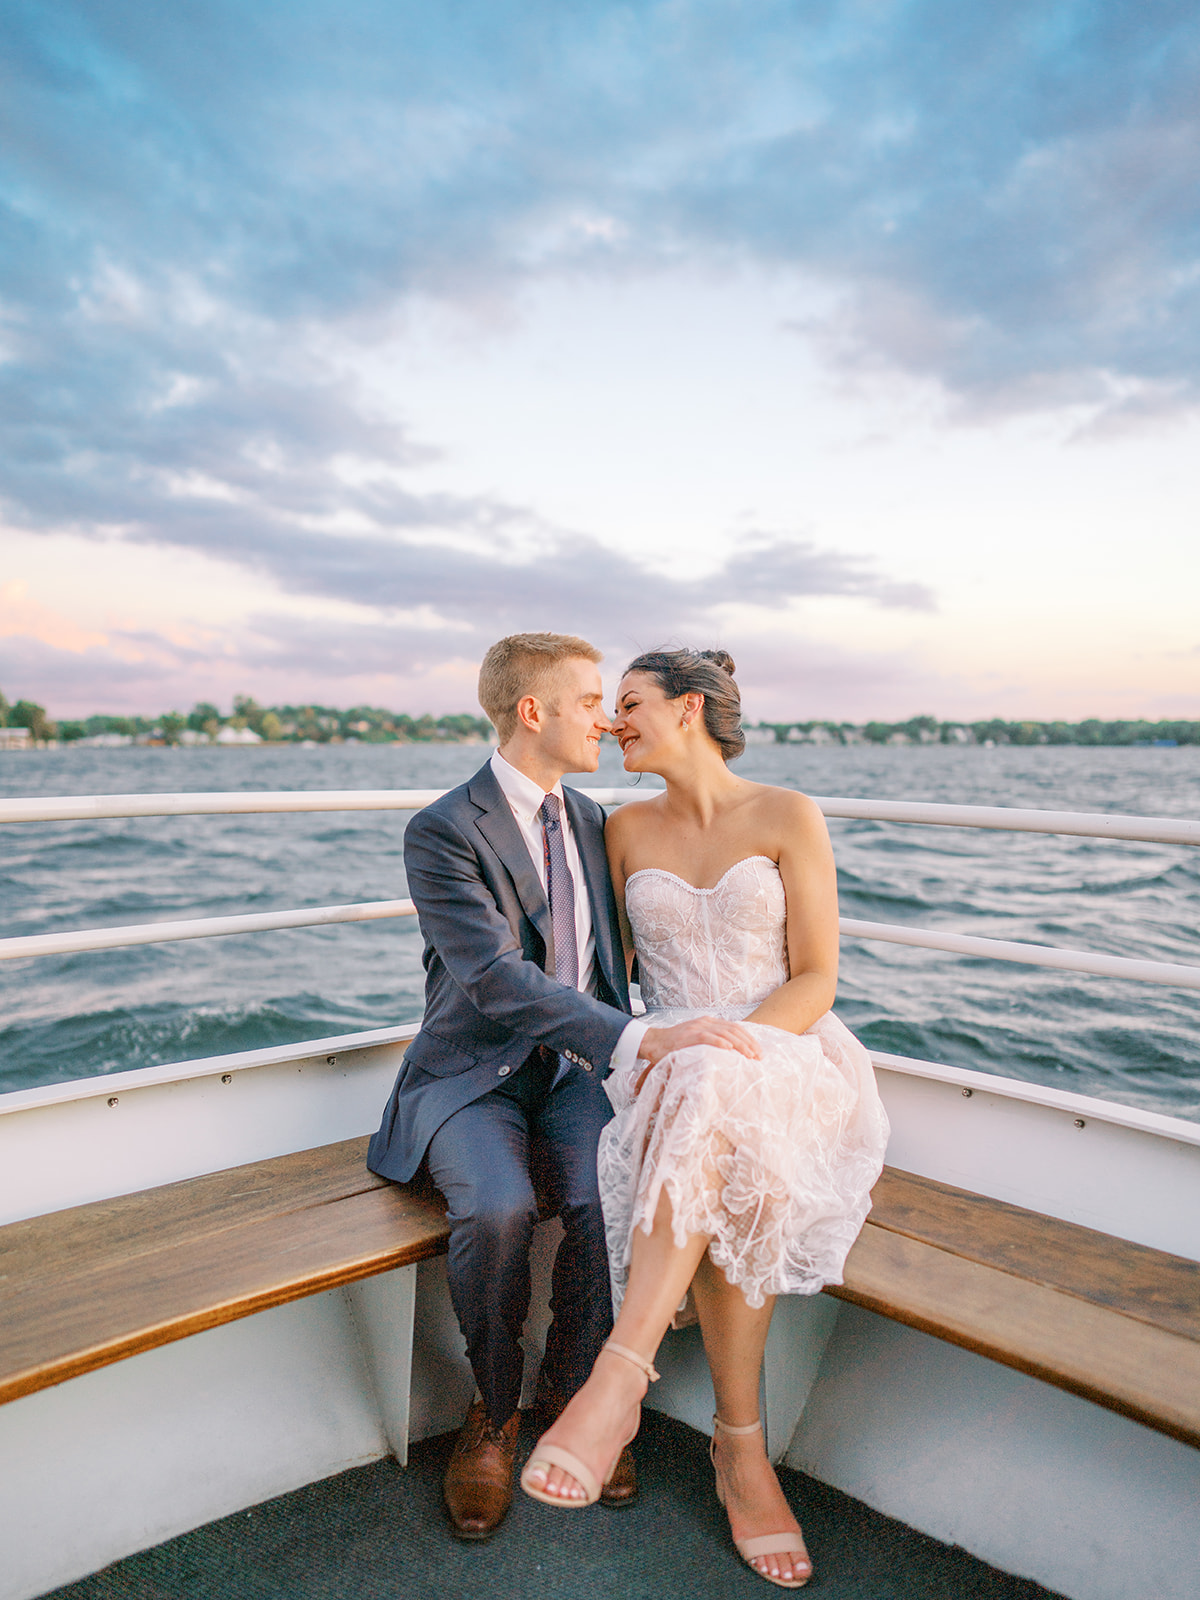 Bride and groom photo at their Lake Minnetonka chartered cruise wedding